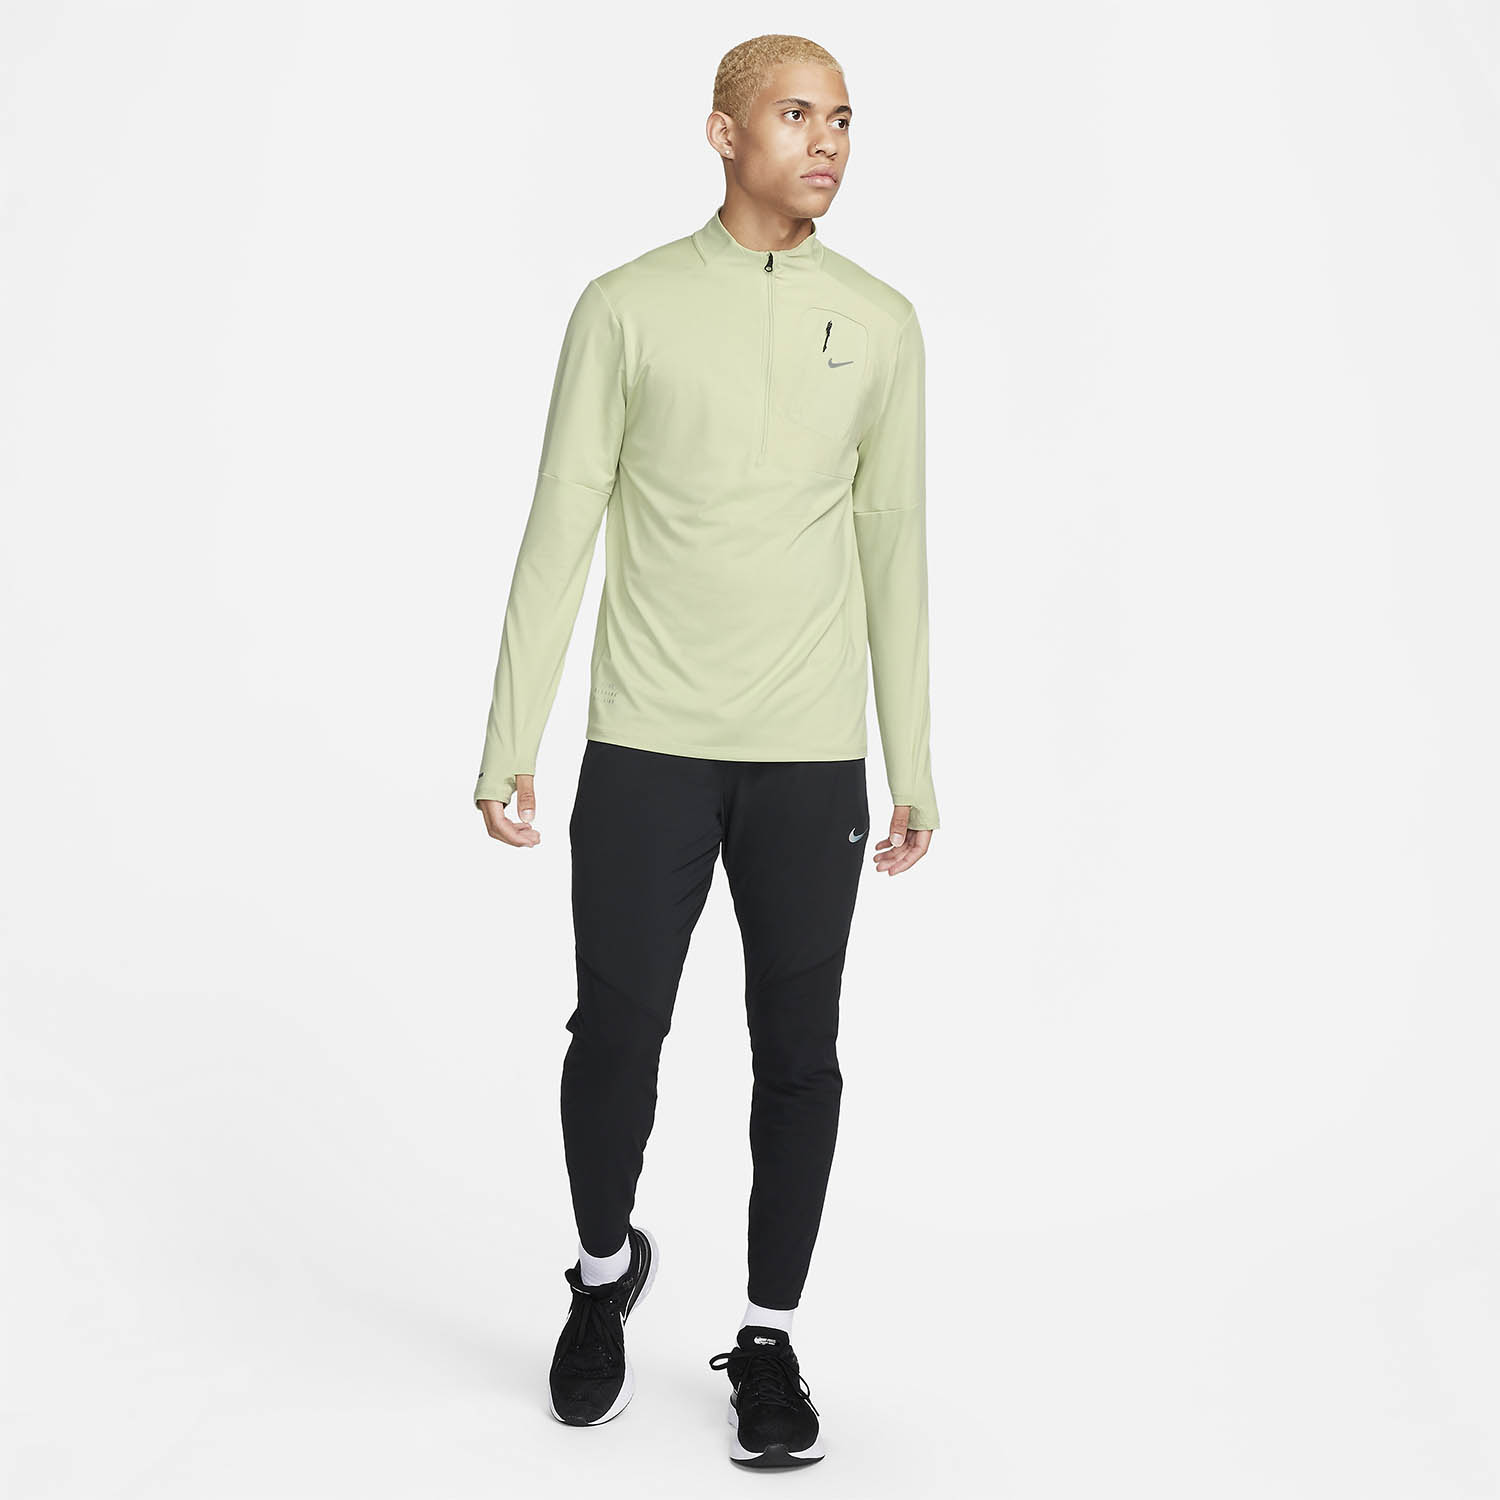 Nike Dri-FIT Element Shirt - Olive Aura/Black/Black Reflective